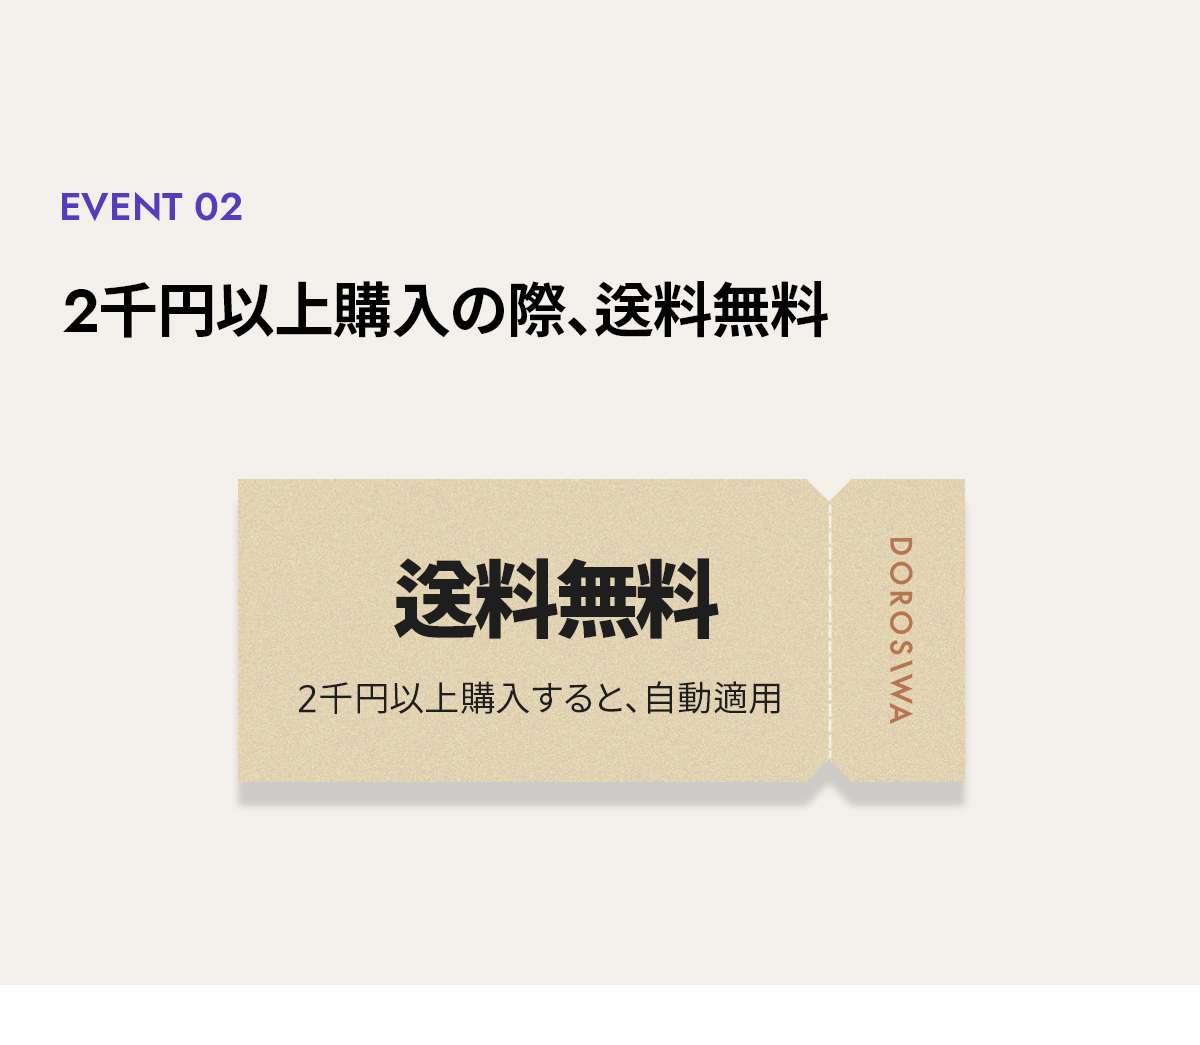 Event 02 - 2千円以上購入の際、送料無料 